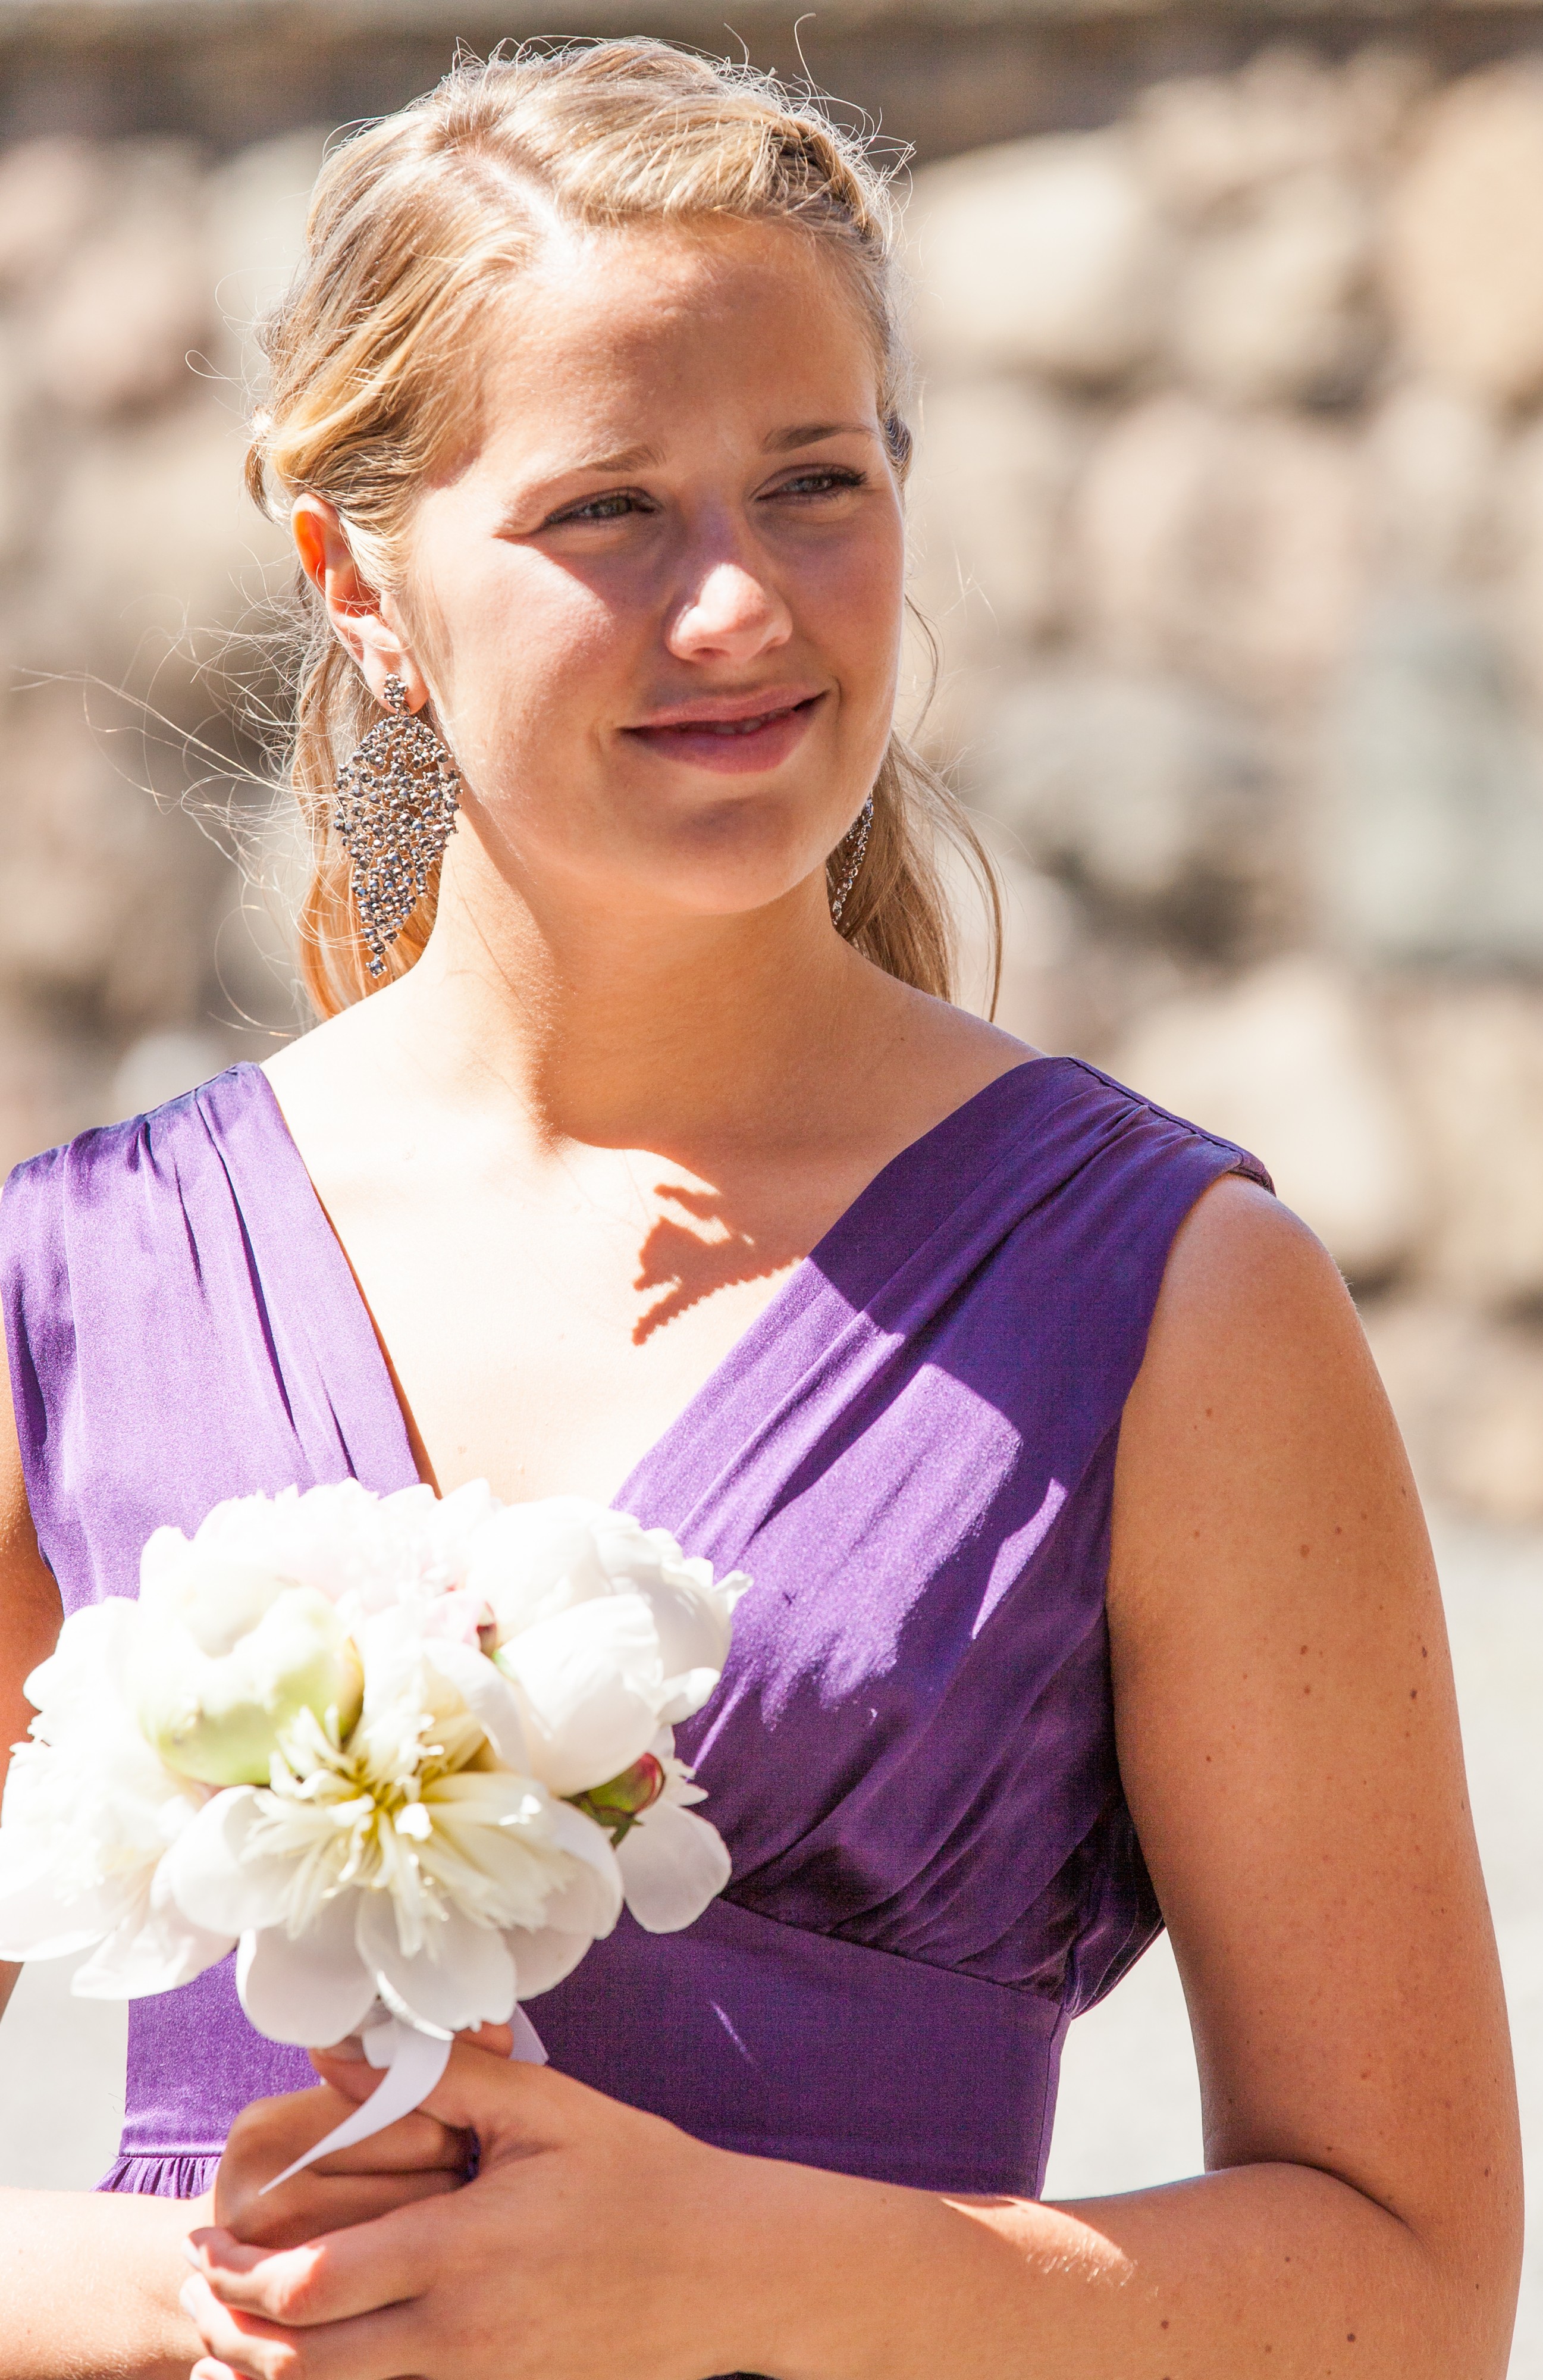 a blond girl in Gothenburg, Sweden in June 2014, picture 3/4